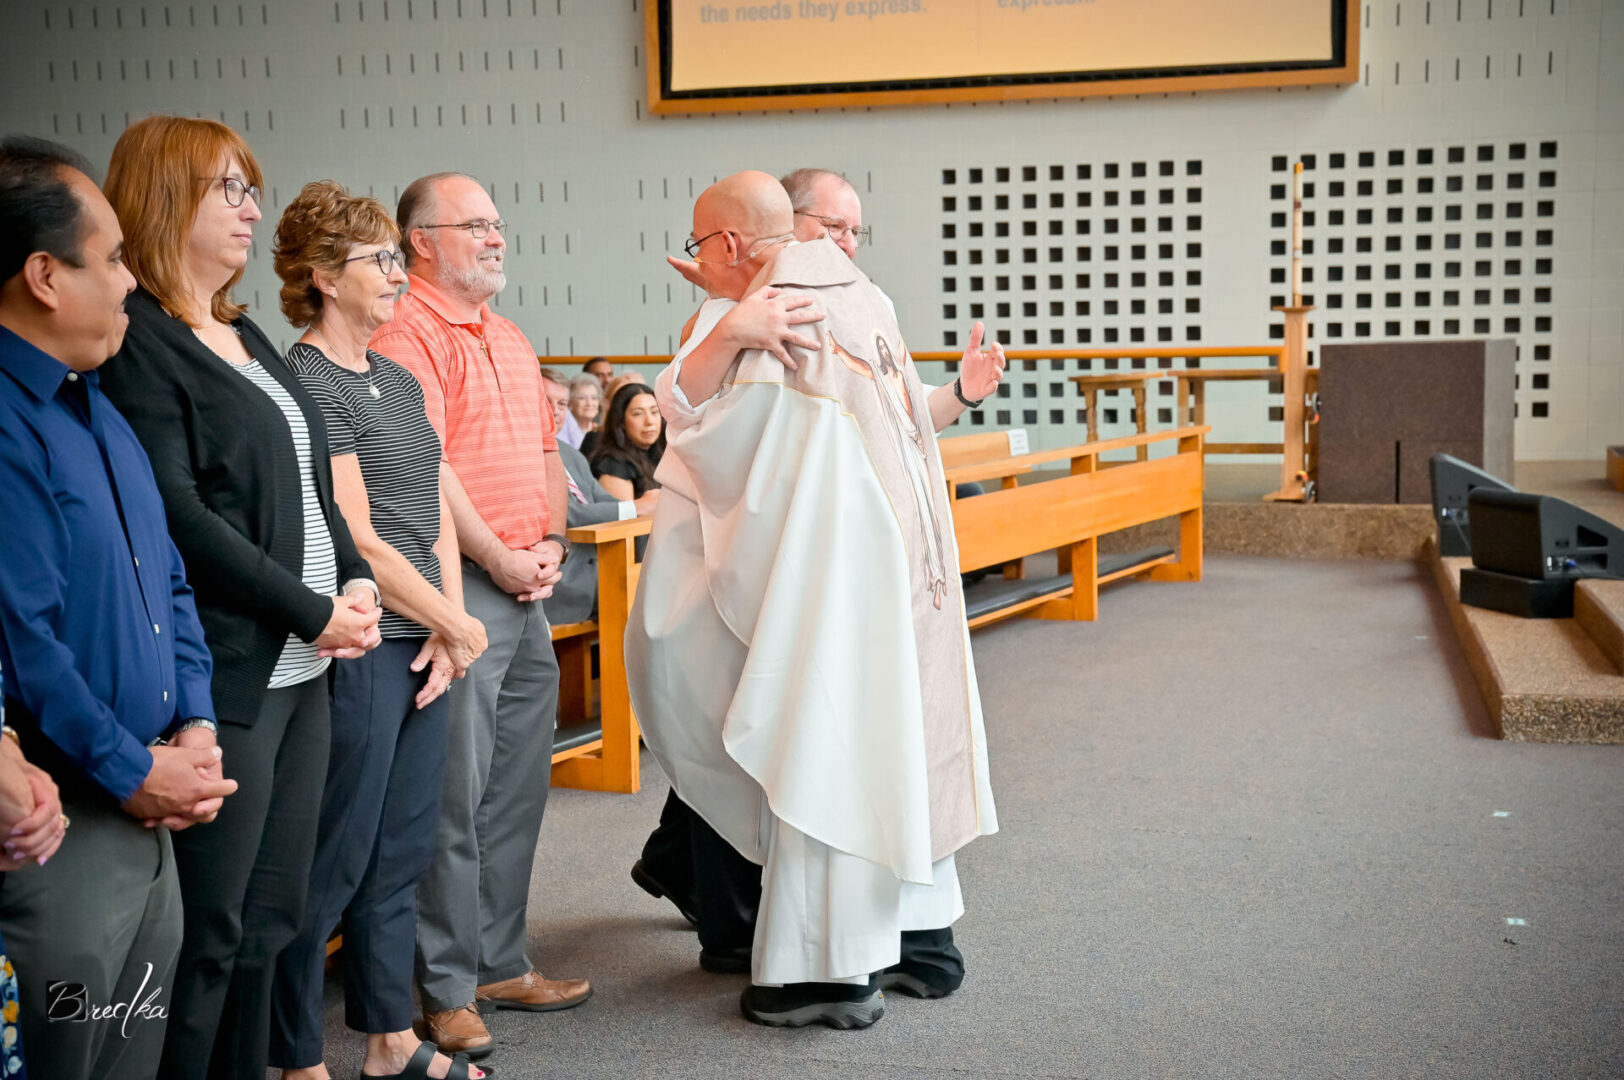 Man in white robe receives a hug in church.